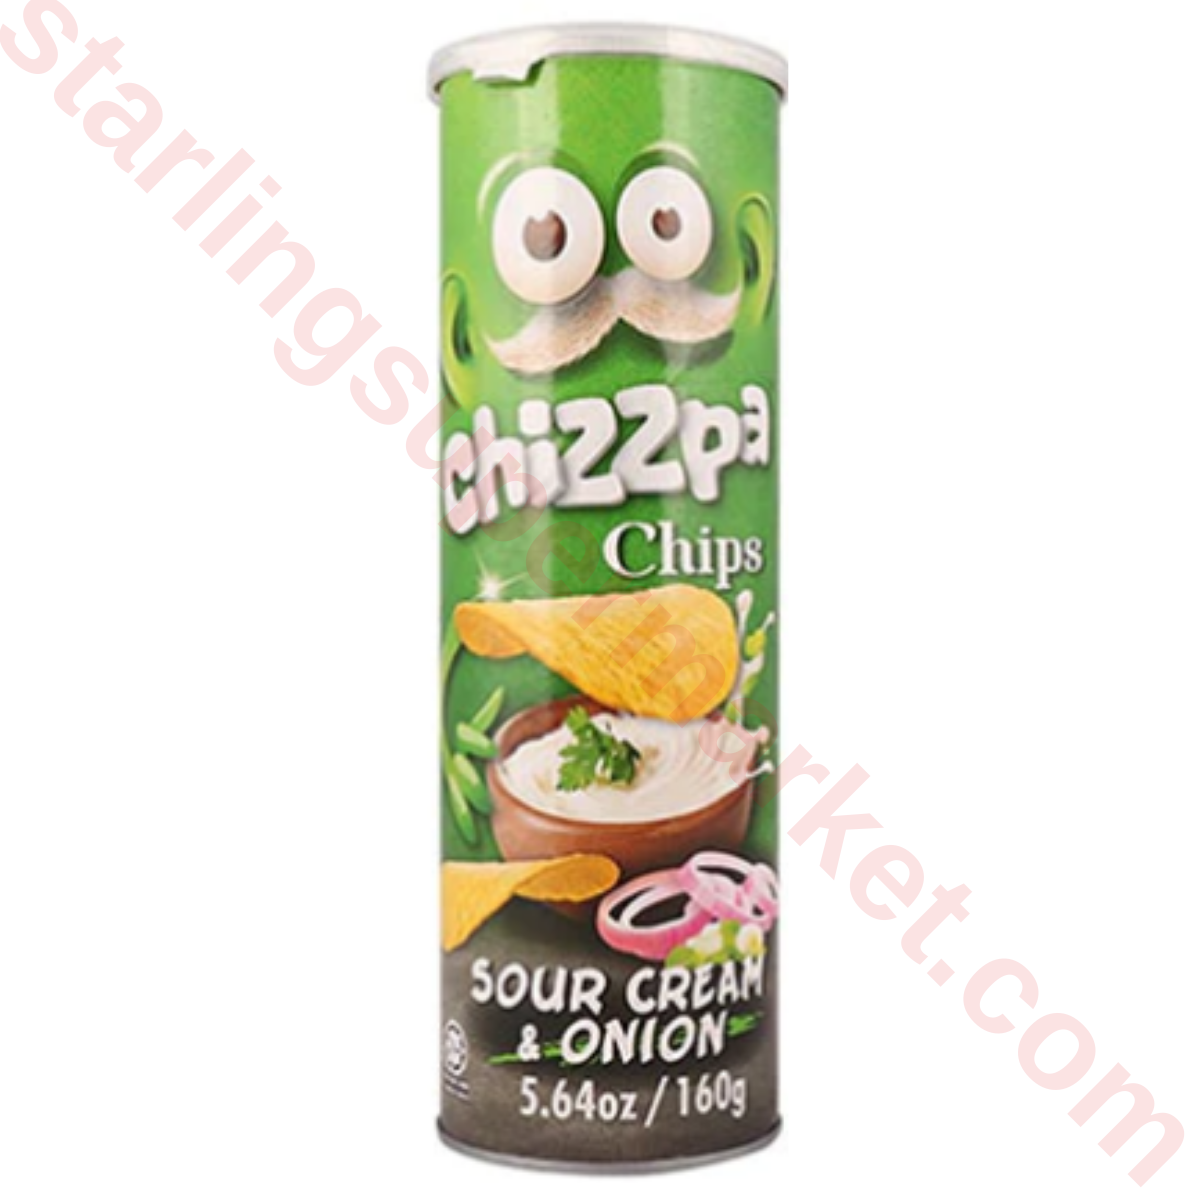 CHIZZPA CHIPS SOUR CREAM&ONION 160 G